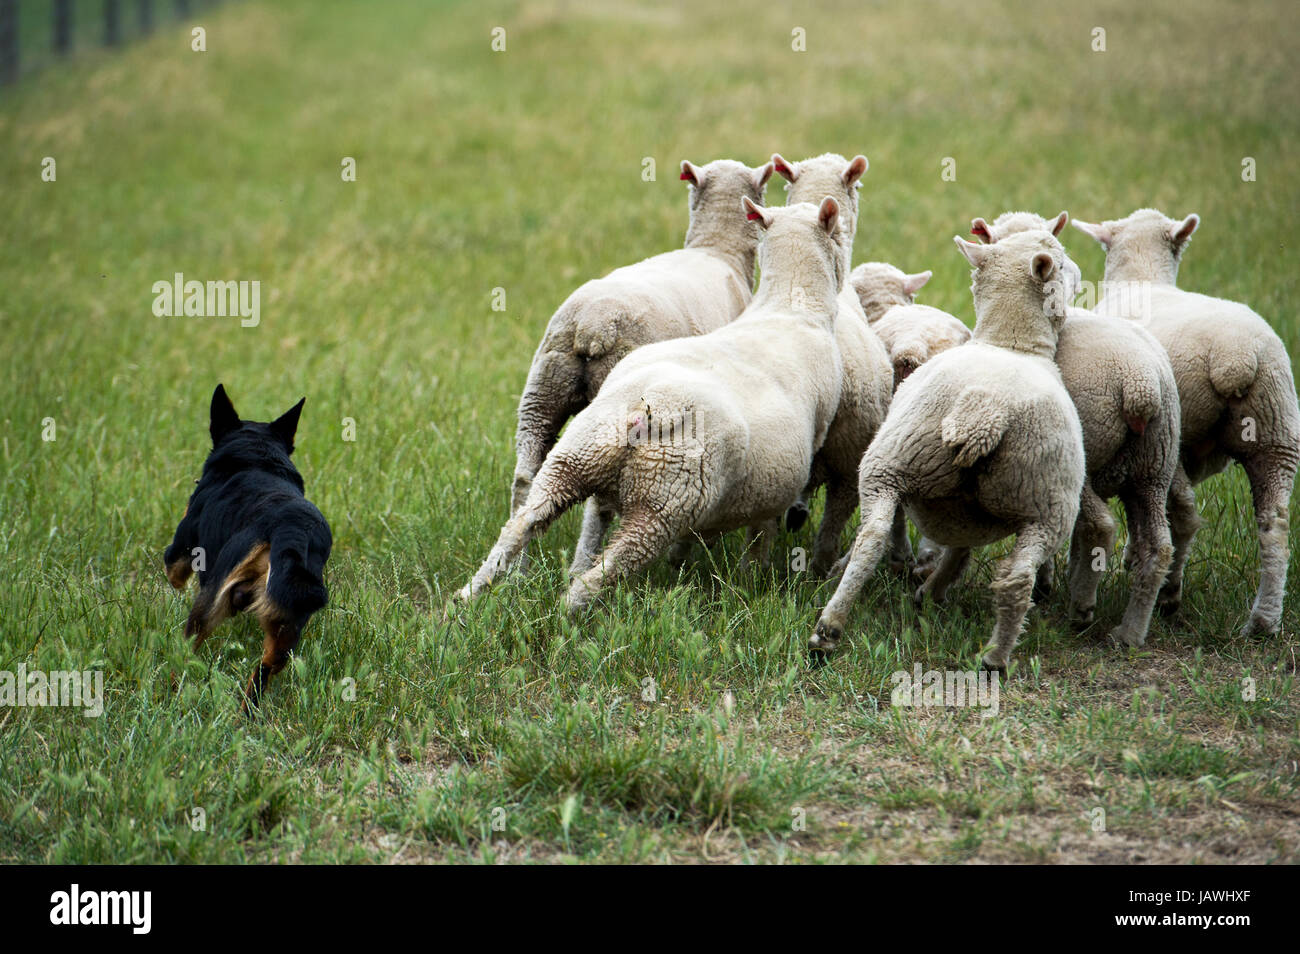 A kelpie dog herds sheep in a farm field. Stock Photo